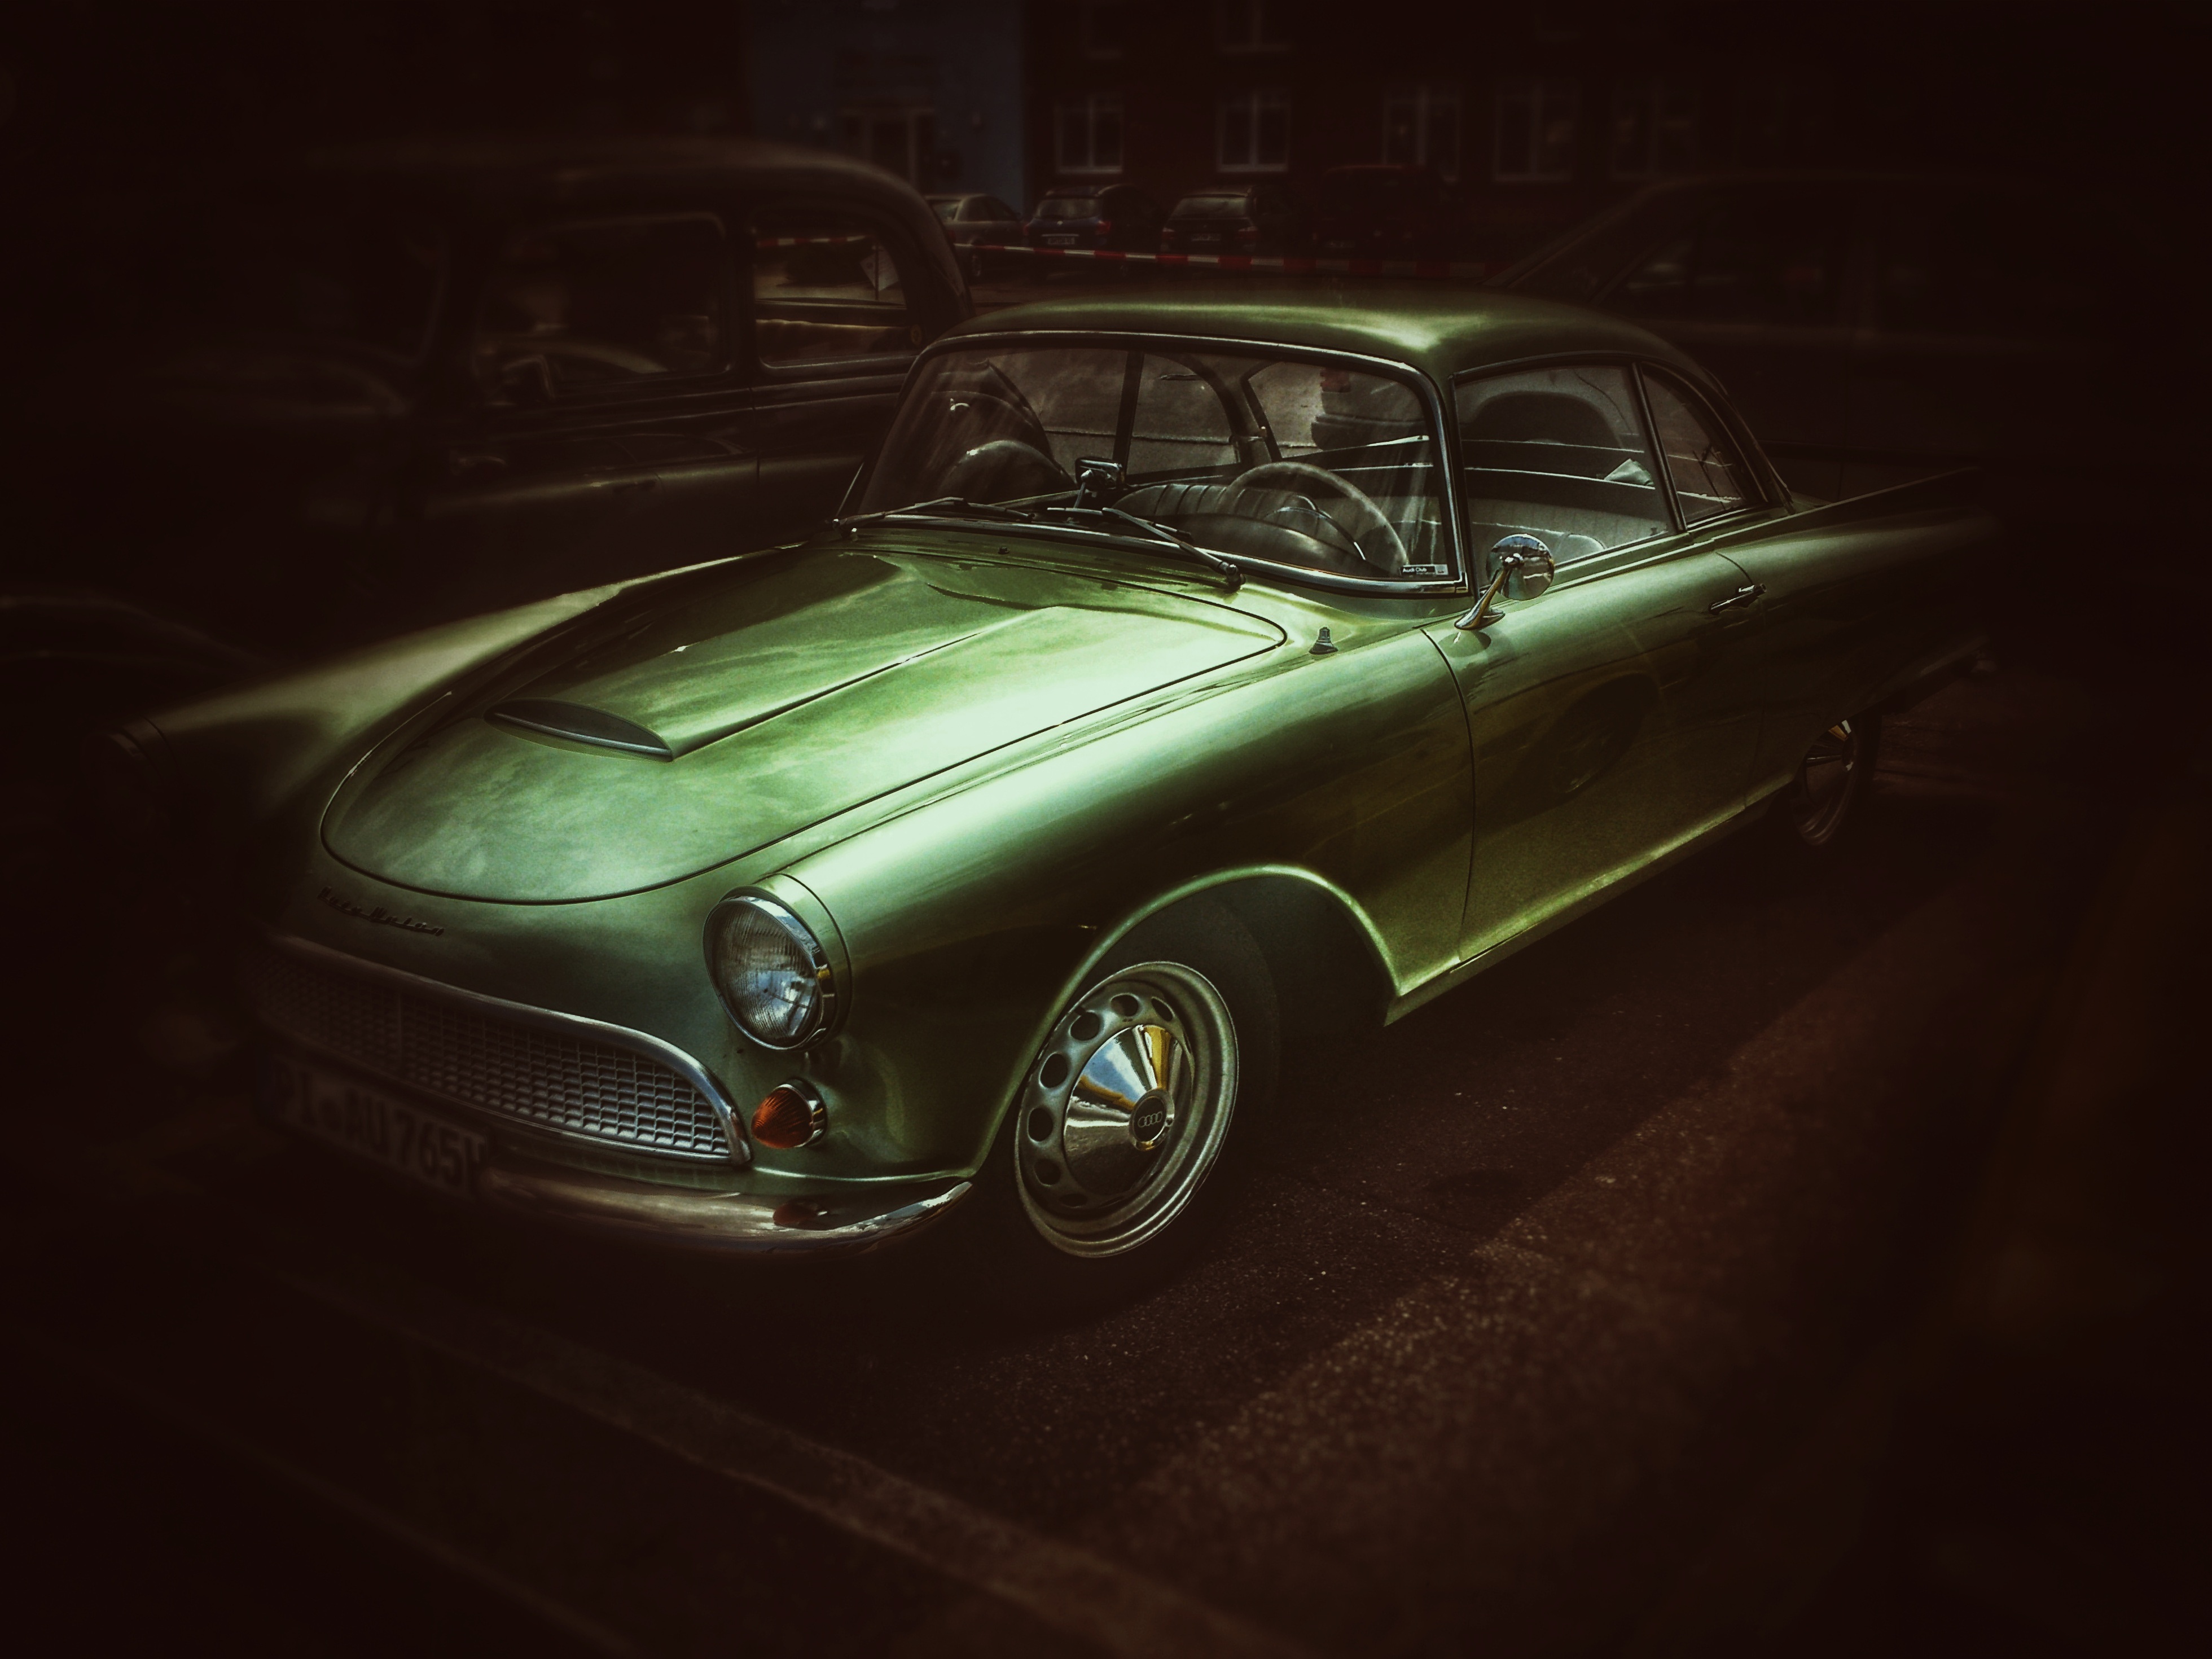 cars, shine, car, brilliance, old, vintage, style, retro, ancient